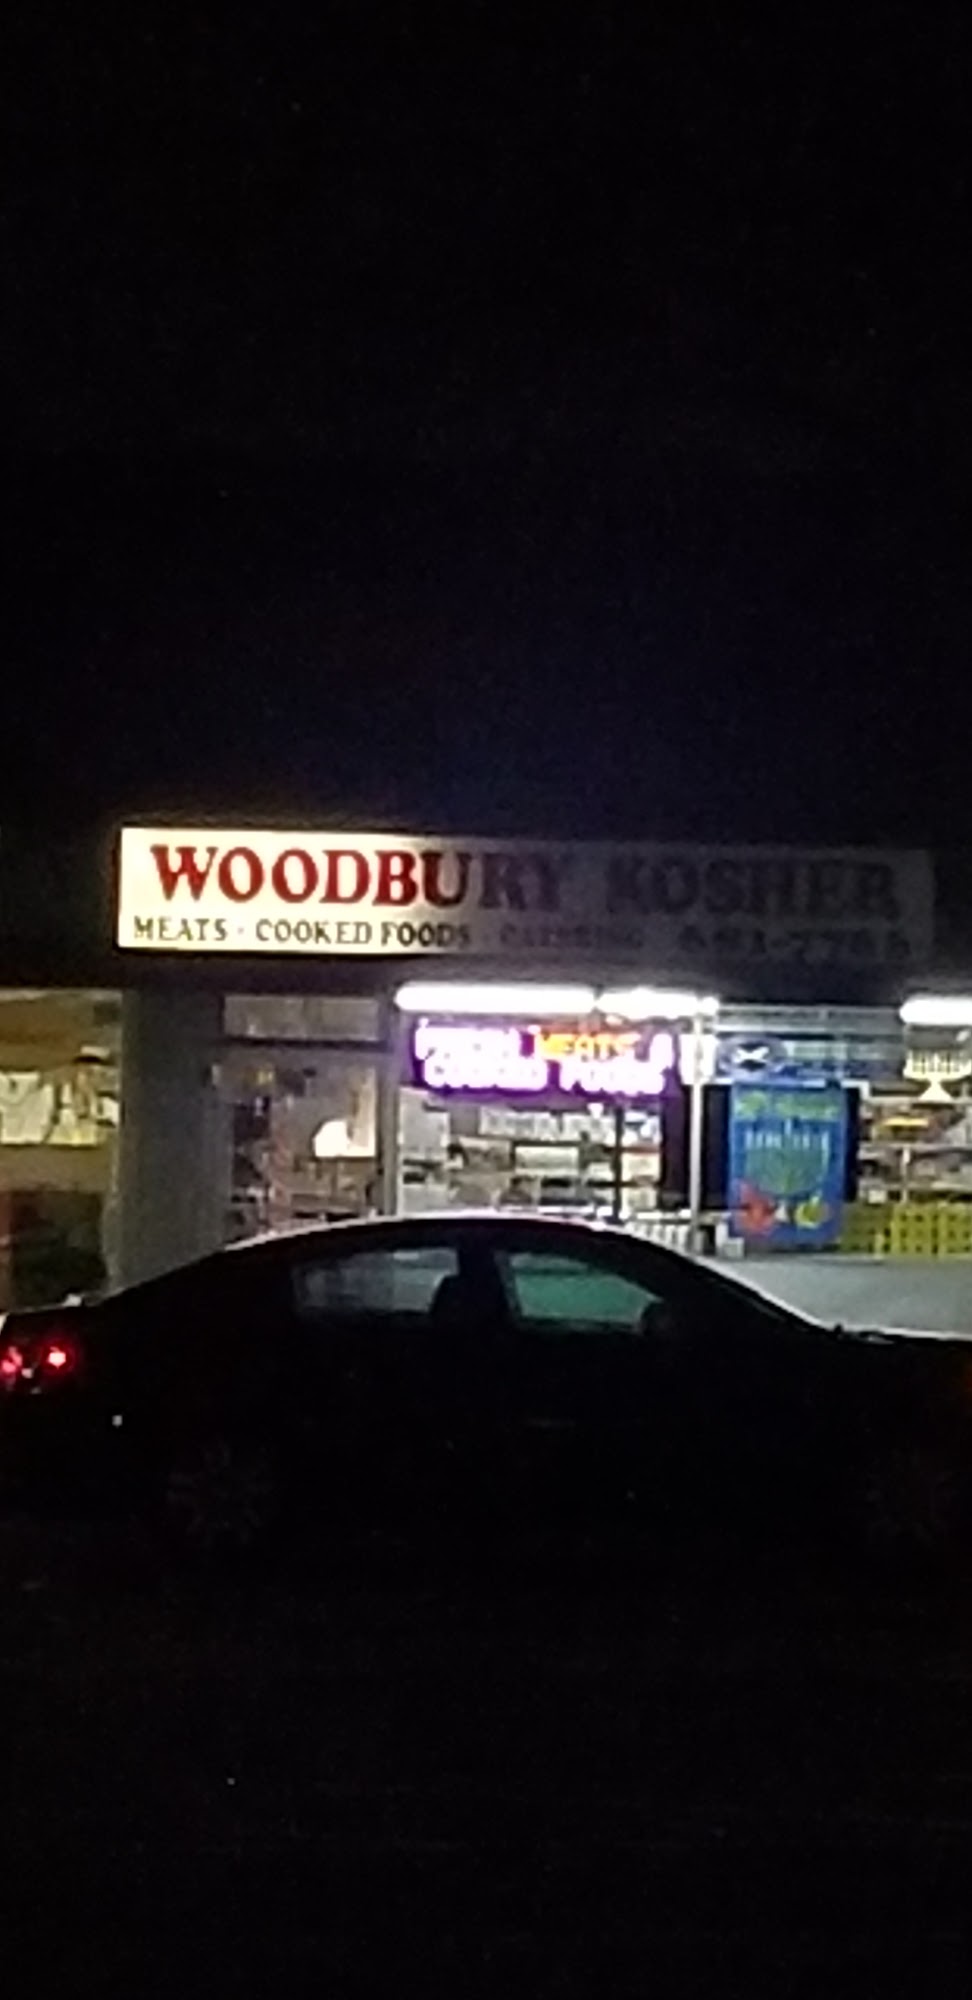 Woodbury Kosher Meats & Catering